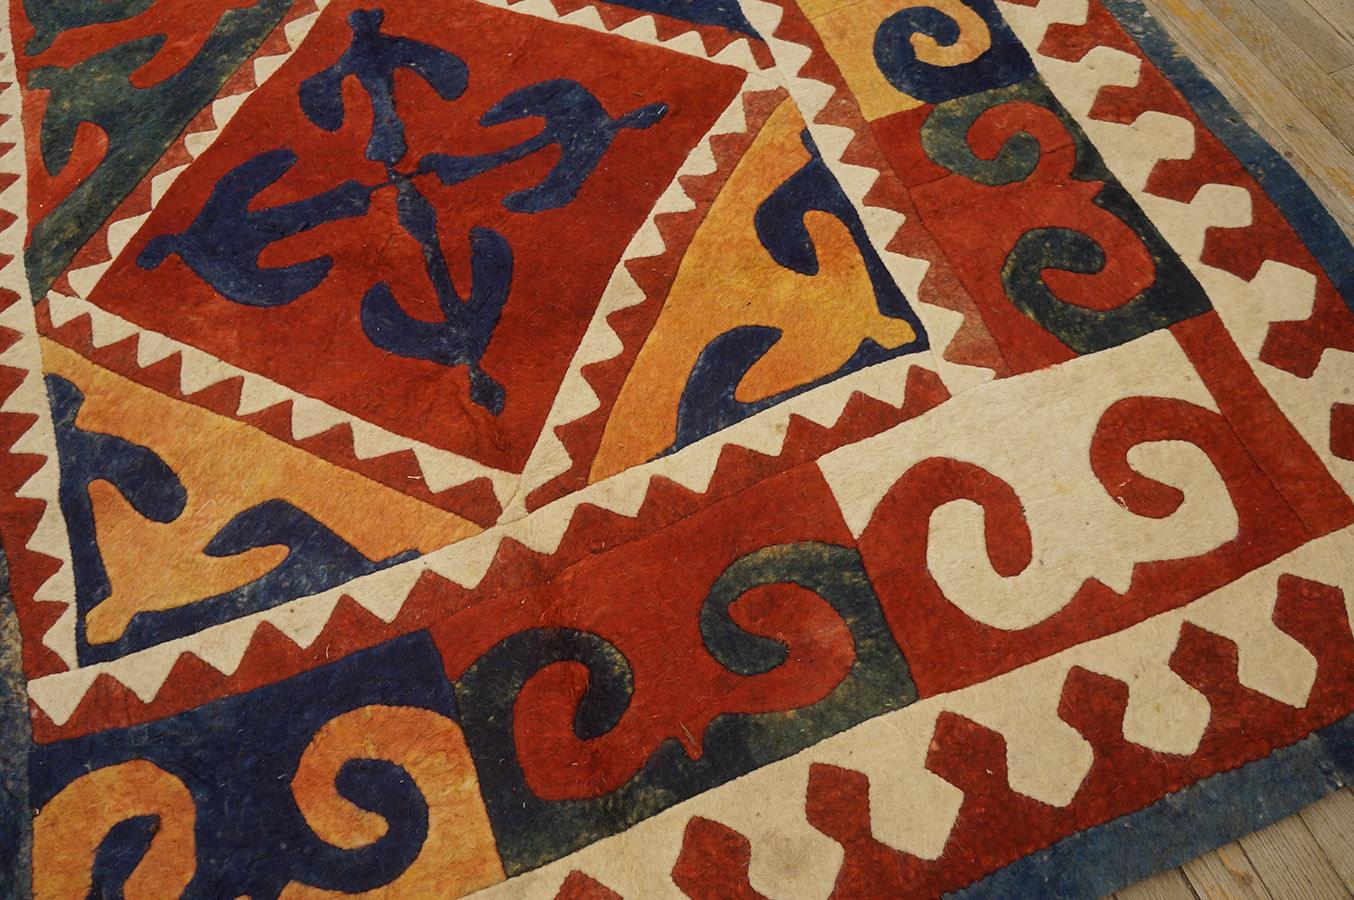 Late 19th Century Kirghiz Felt Shyrdak Carpet ( 6' x 12' - 188 x 365 ) For Sale 1